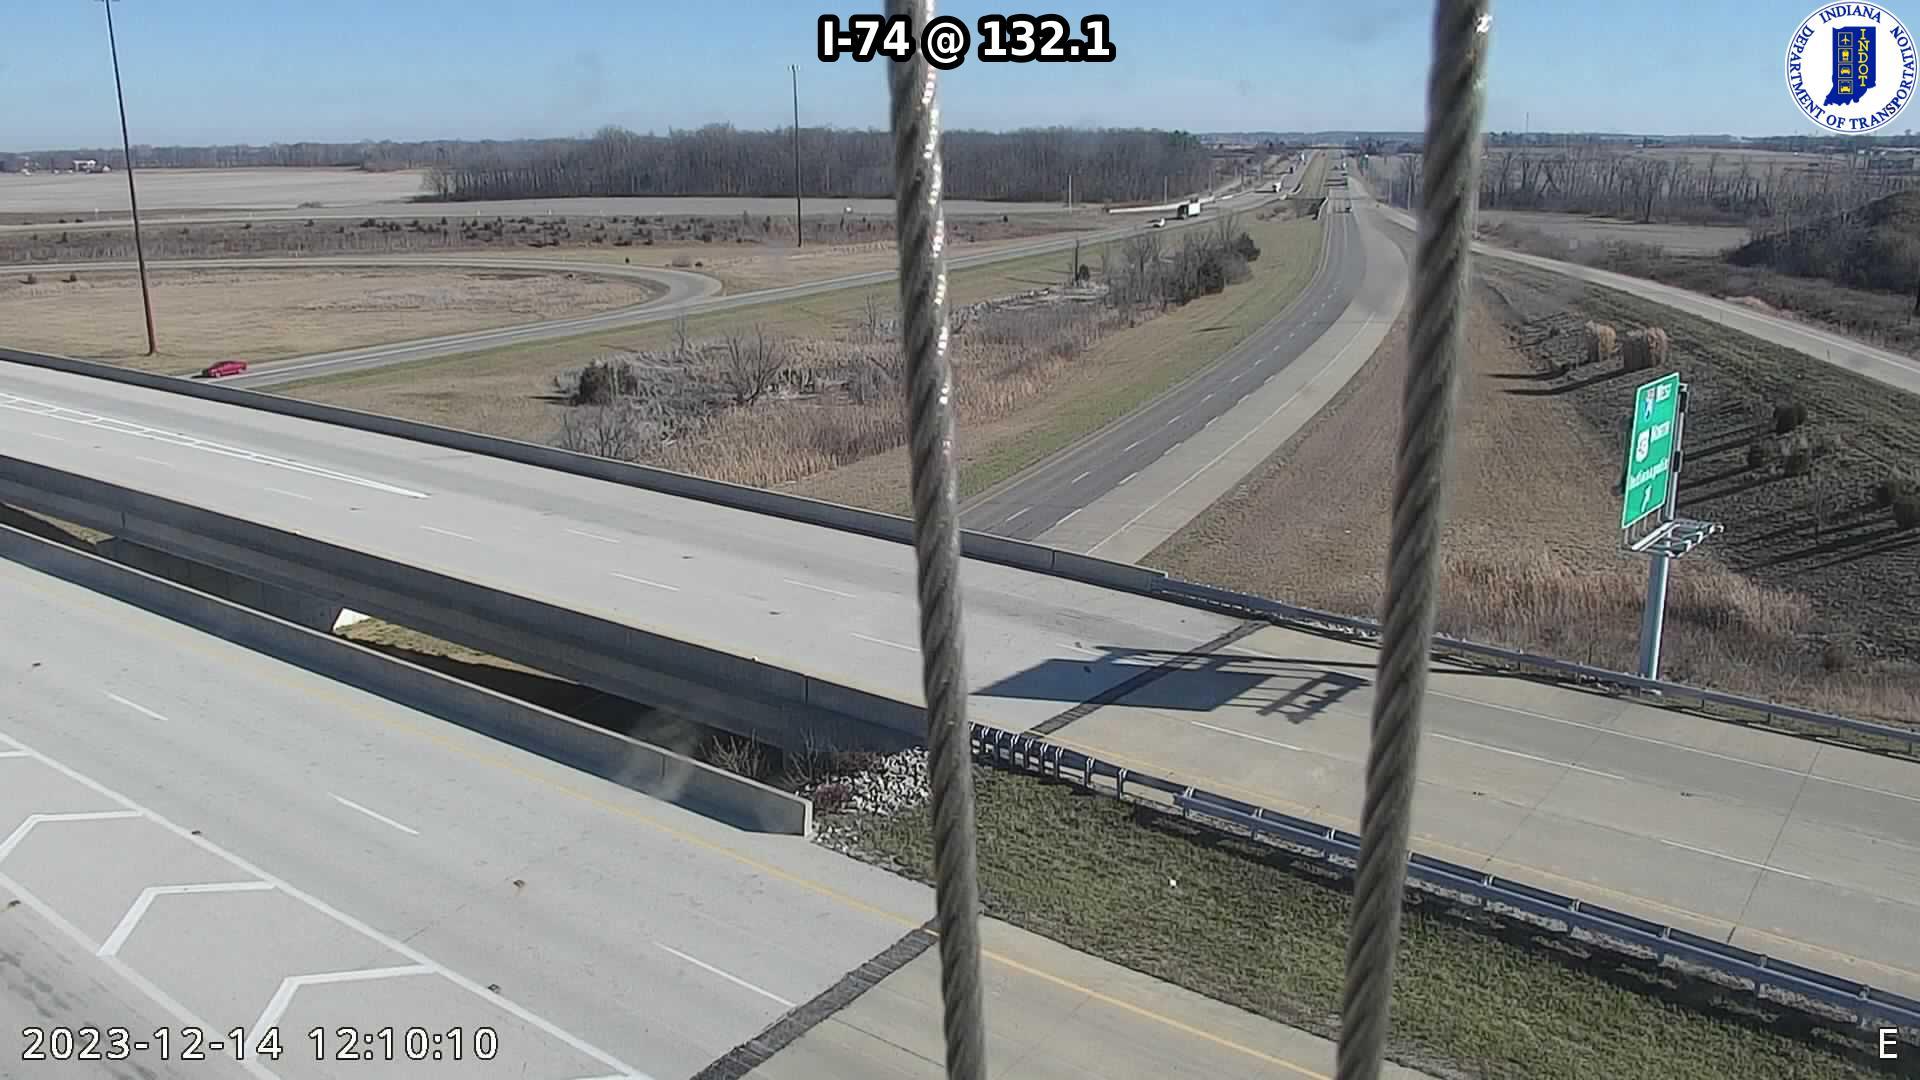 Craig: I-74: I-74 @ 132.1 Traffic Camera